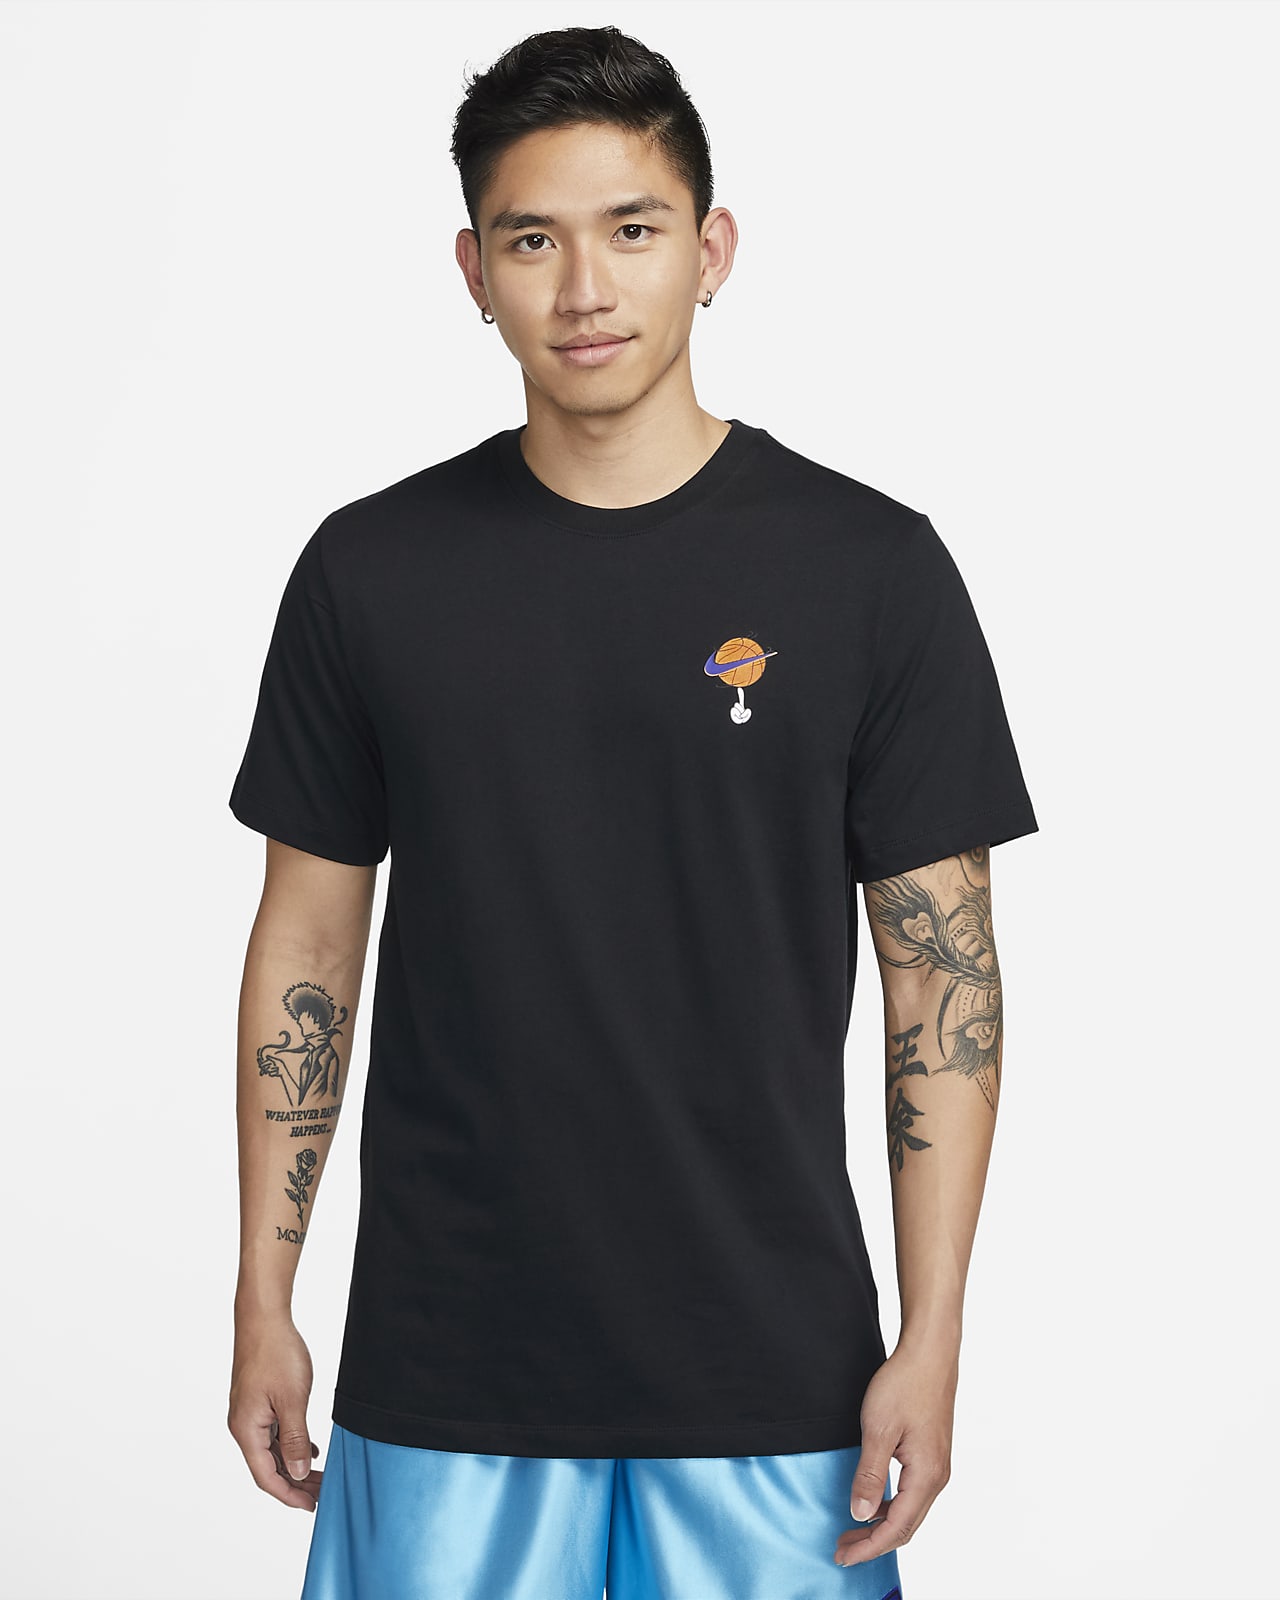 Nike x Space Jam: A New Legacy Men's Basketball T-Shirt